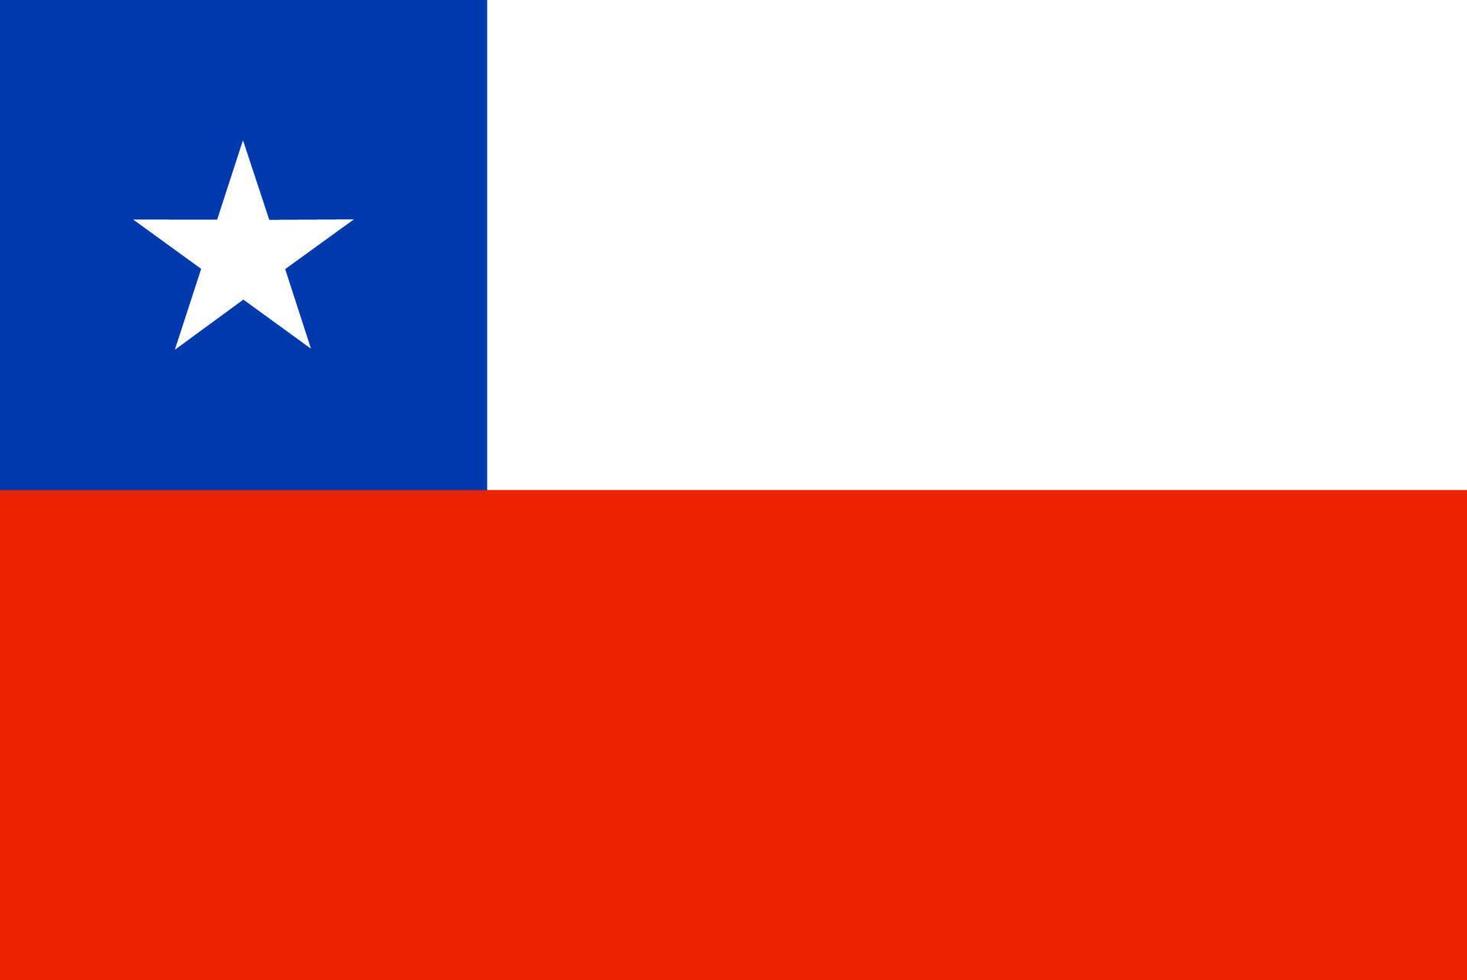 vlag van Chili. symbool van onafhankelijkheid dag, souvenir voetbal spel, knop taal, icoon. vector